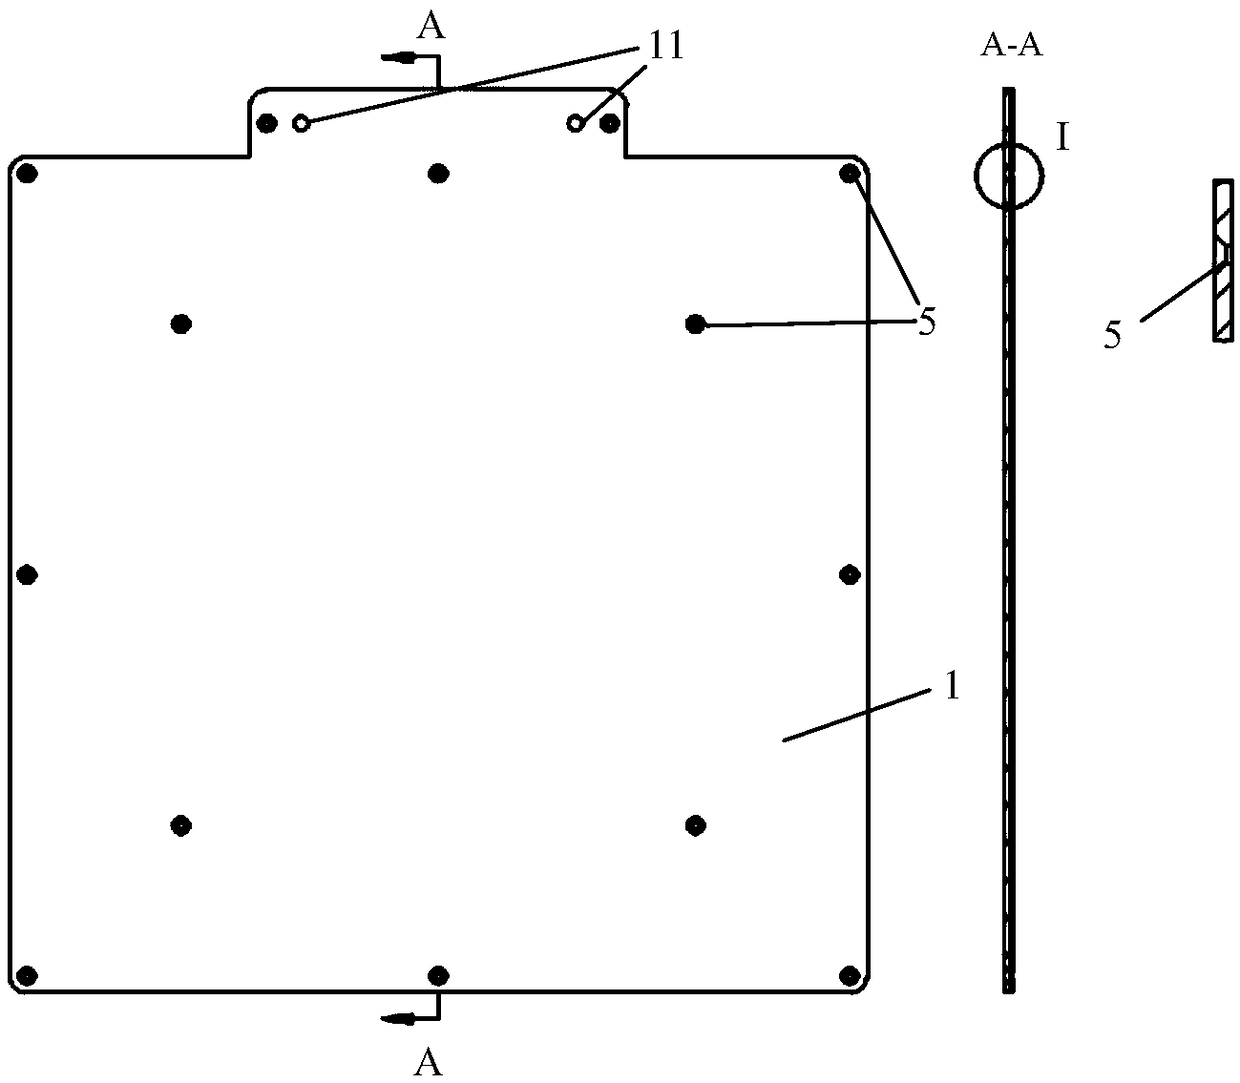 Pressure-resistant acoustic filter for truncation parametric array and design method